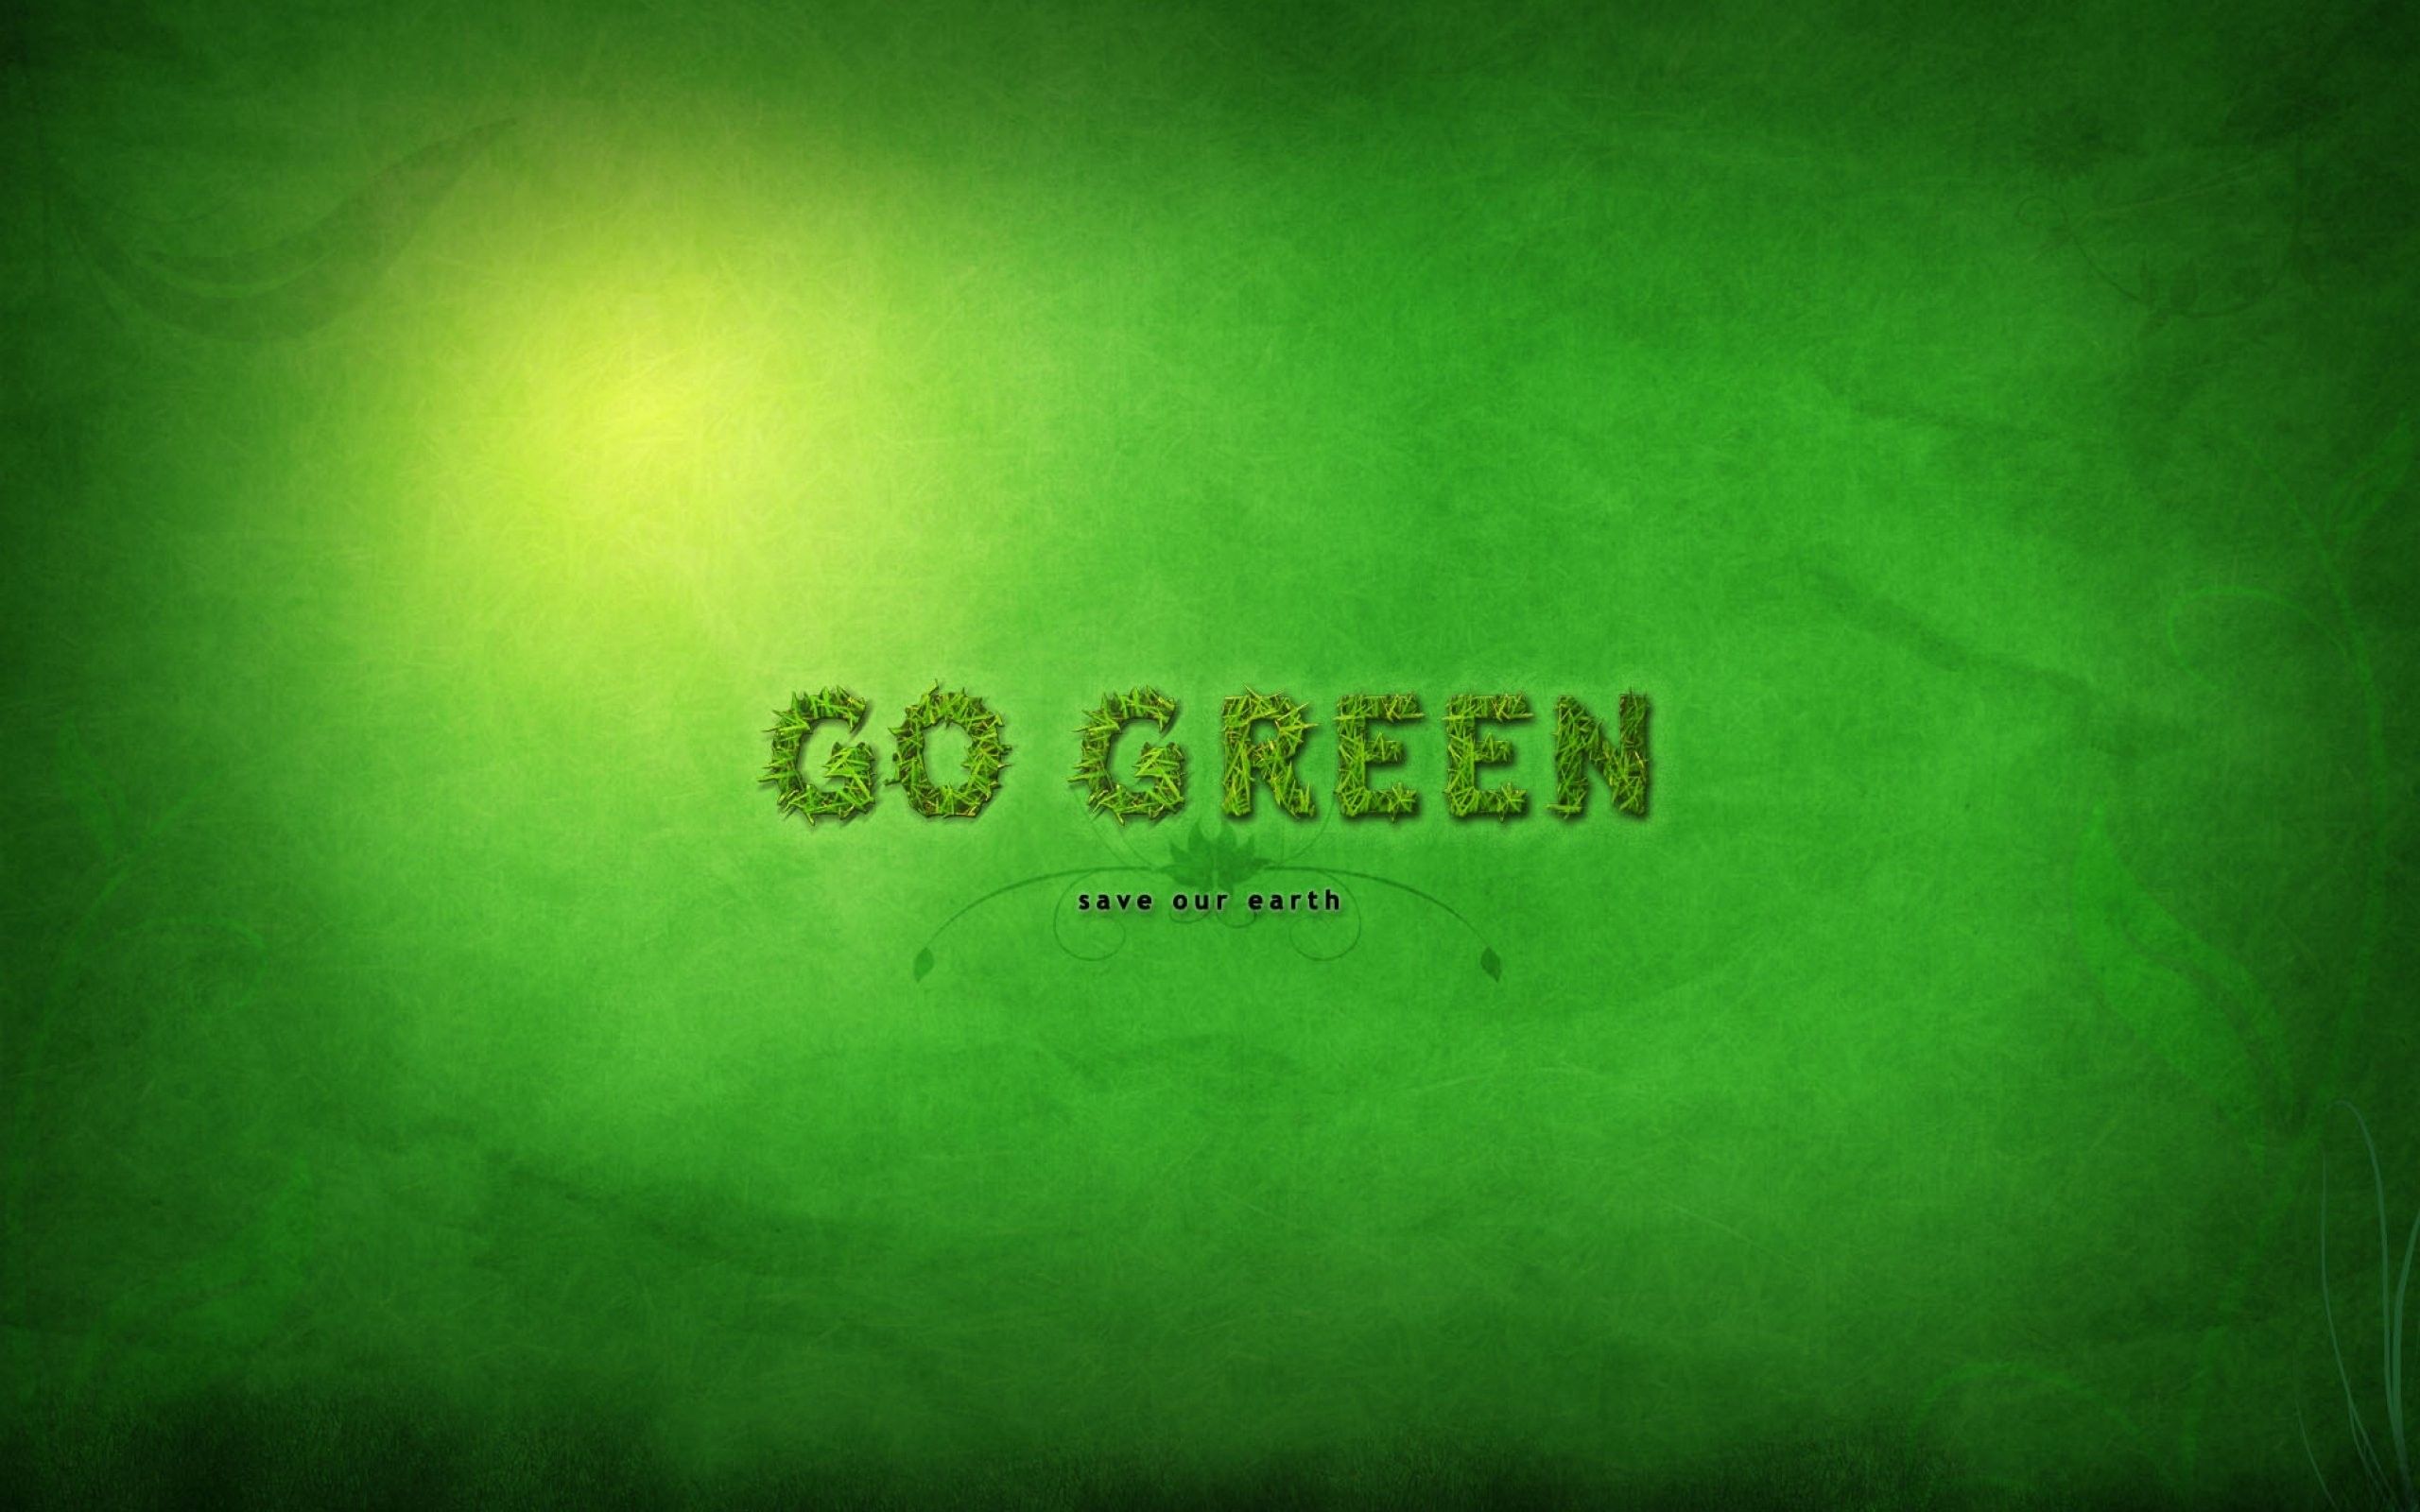 Шрифт на зеленом фоне. Надпись на зеленом фоне. Картинки на рабочий стол зеленые. Зеленые обои с надписью. Зеленая надпись на зеленом фоне.